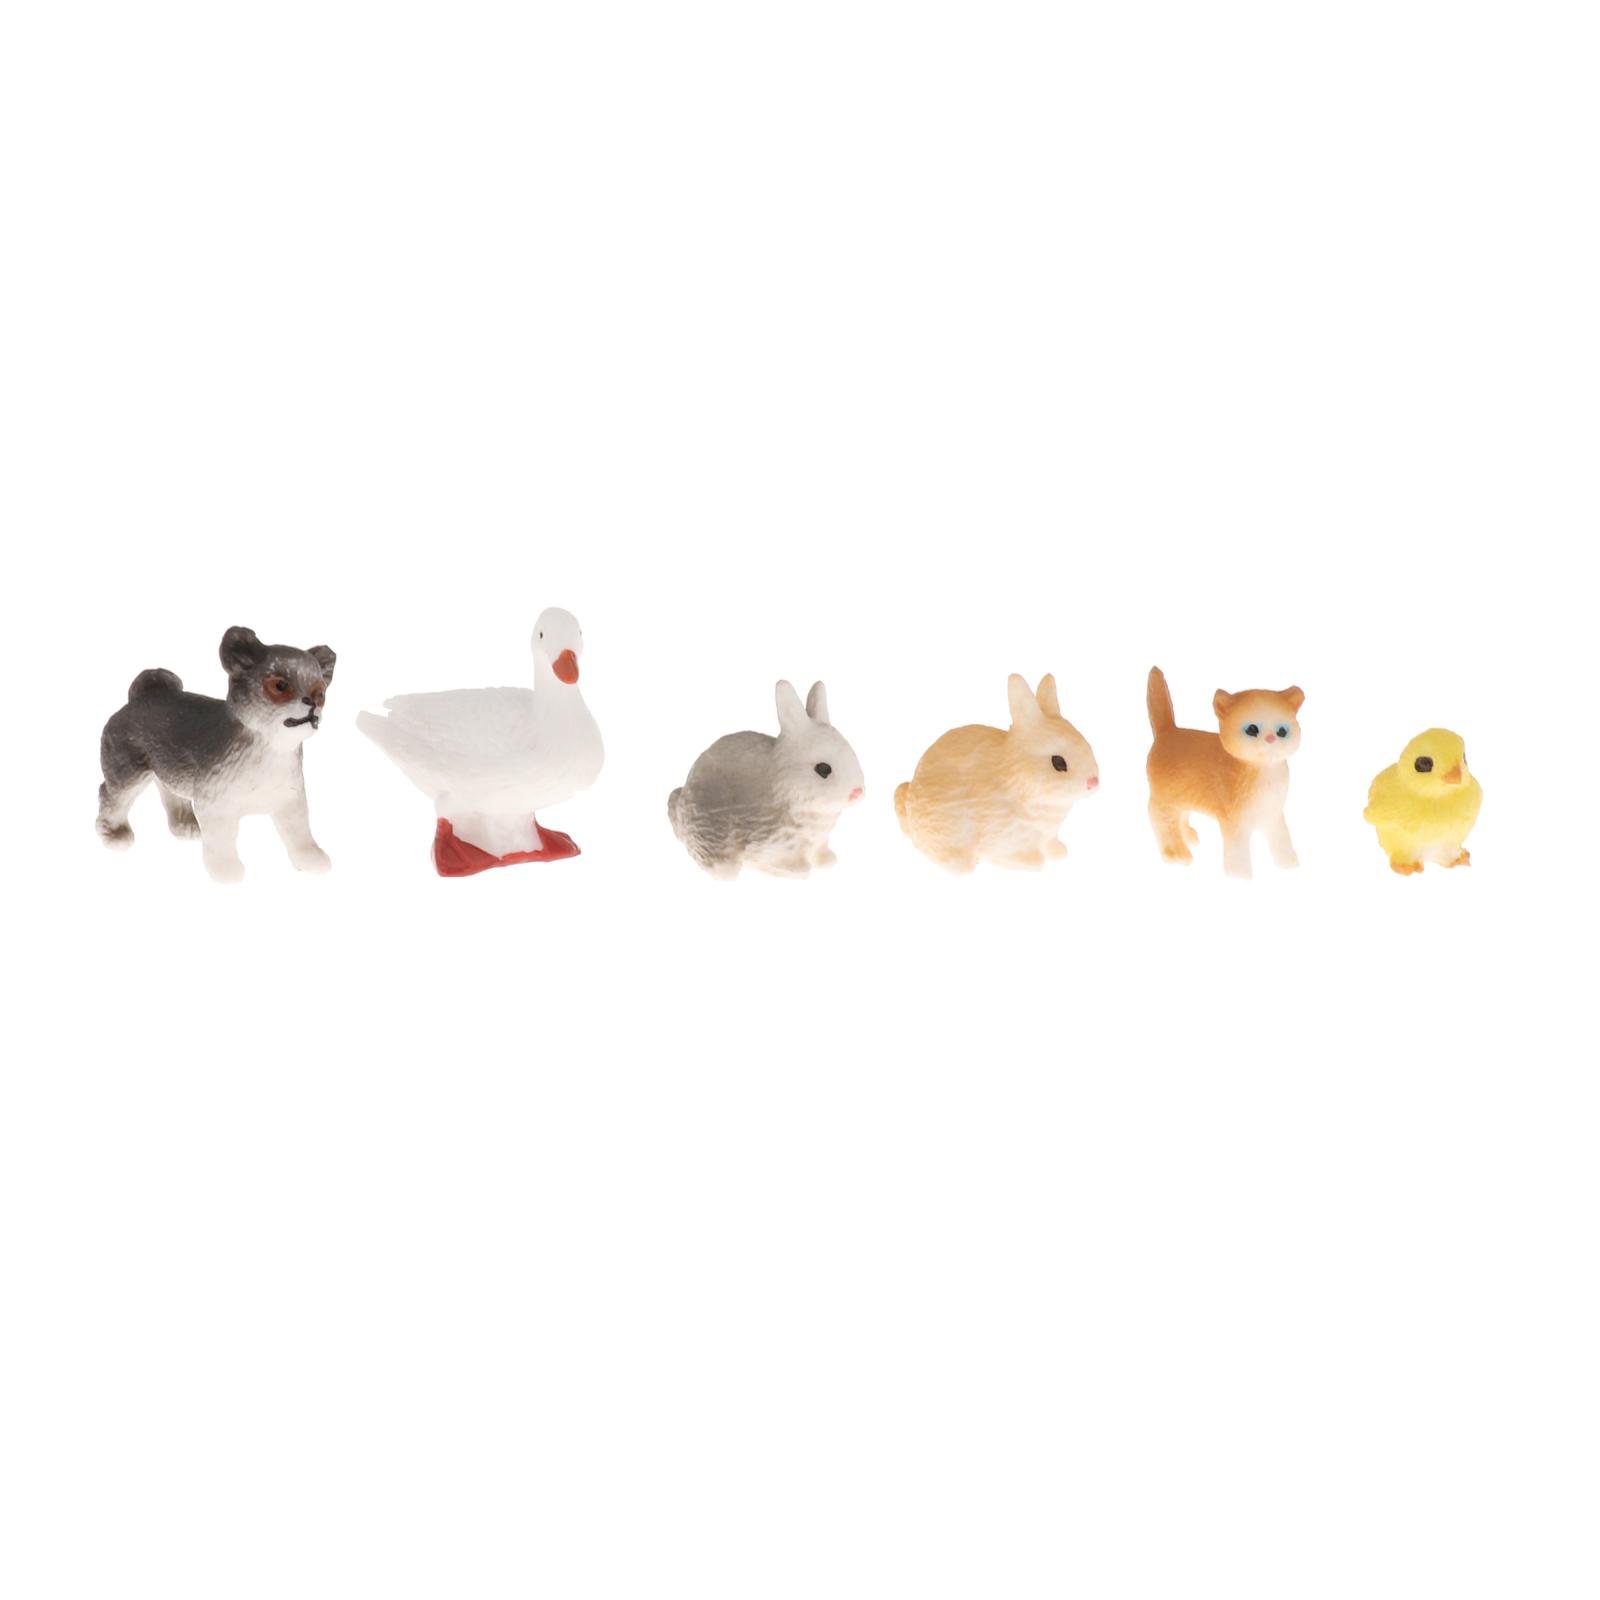 Realistic Mini Livestock Figures Solid Farm Animal Figurines Party Favors